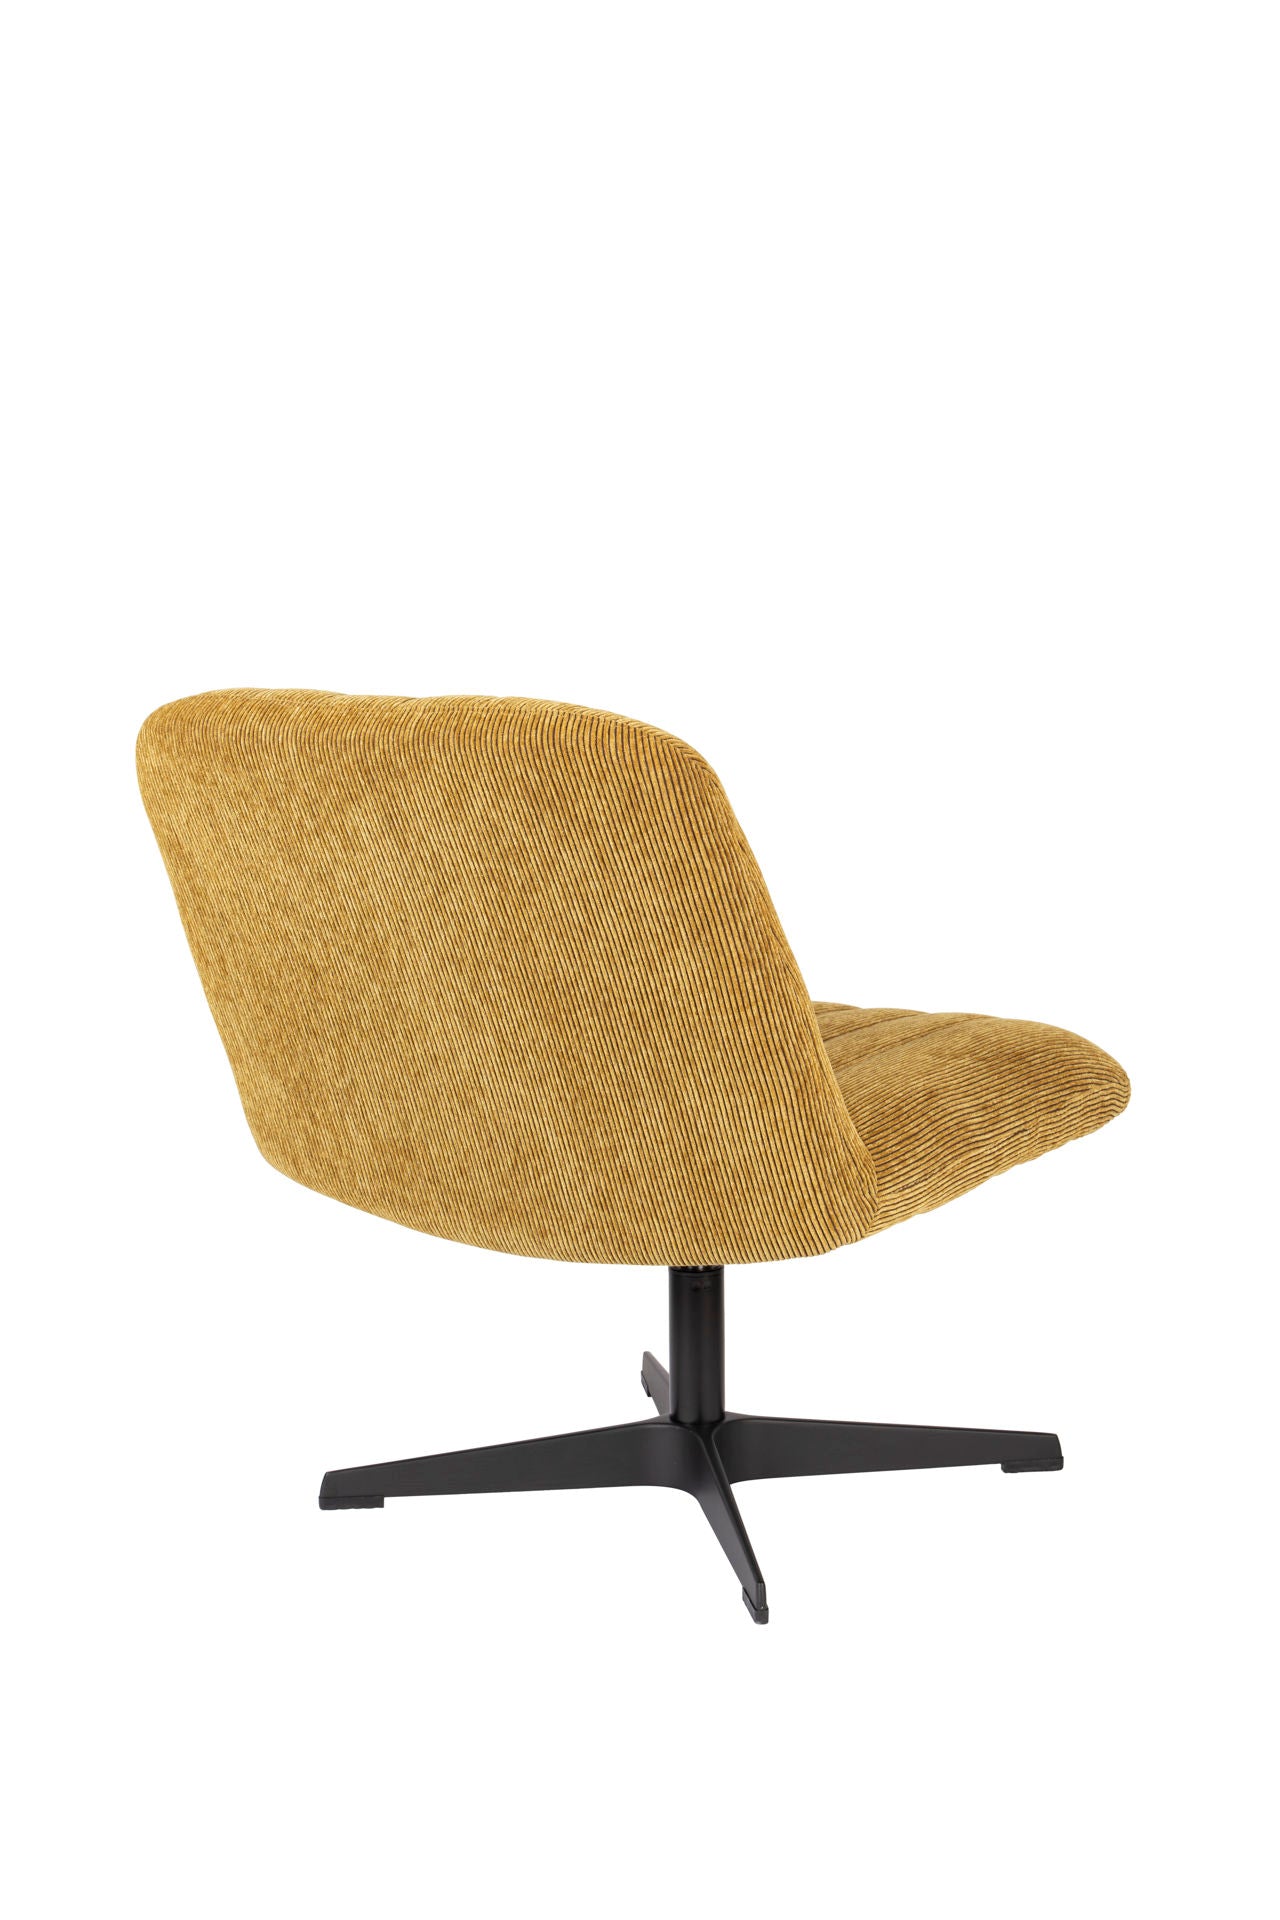 Nancy's Accokeek Lounge Chair - Industrial - Yellow - Polyester, Plywood, Steel - 71 cm x 65 cm x 72.5 cm